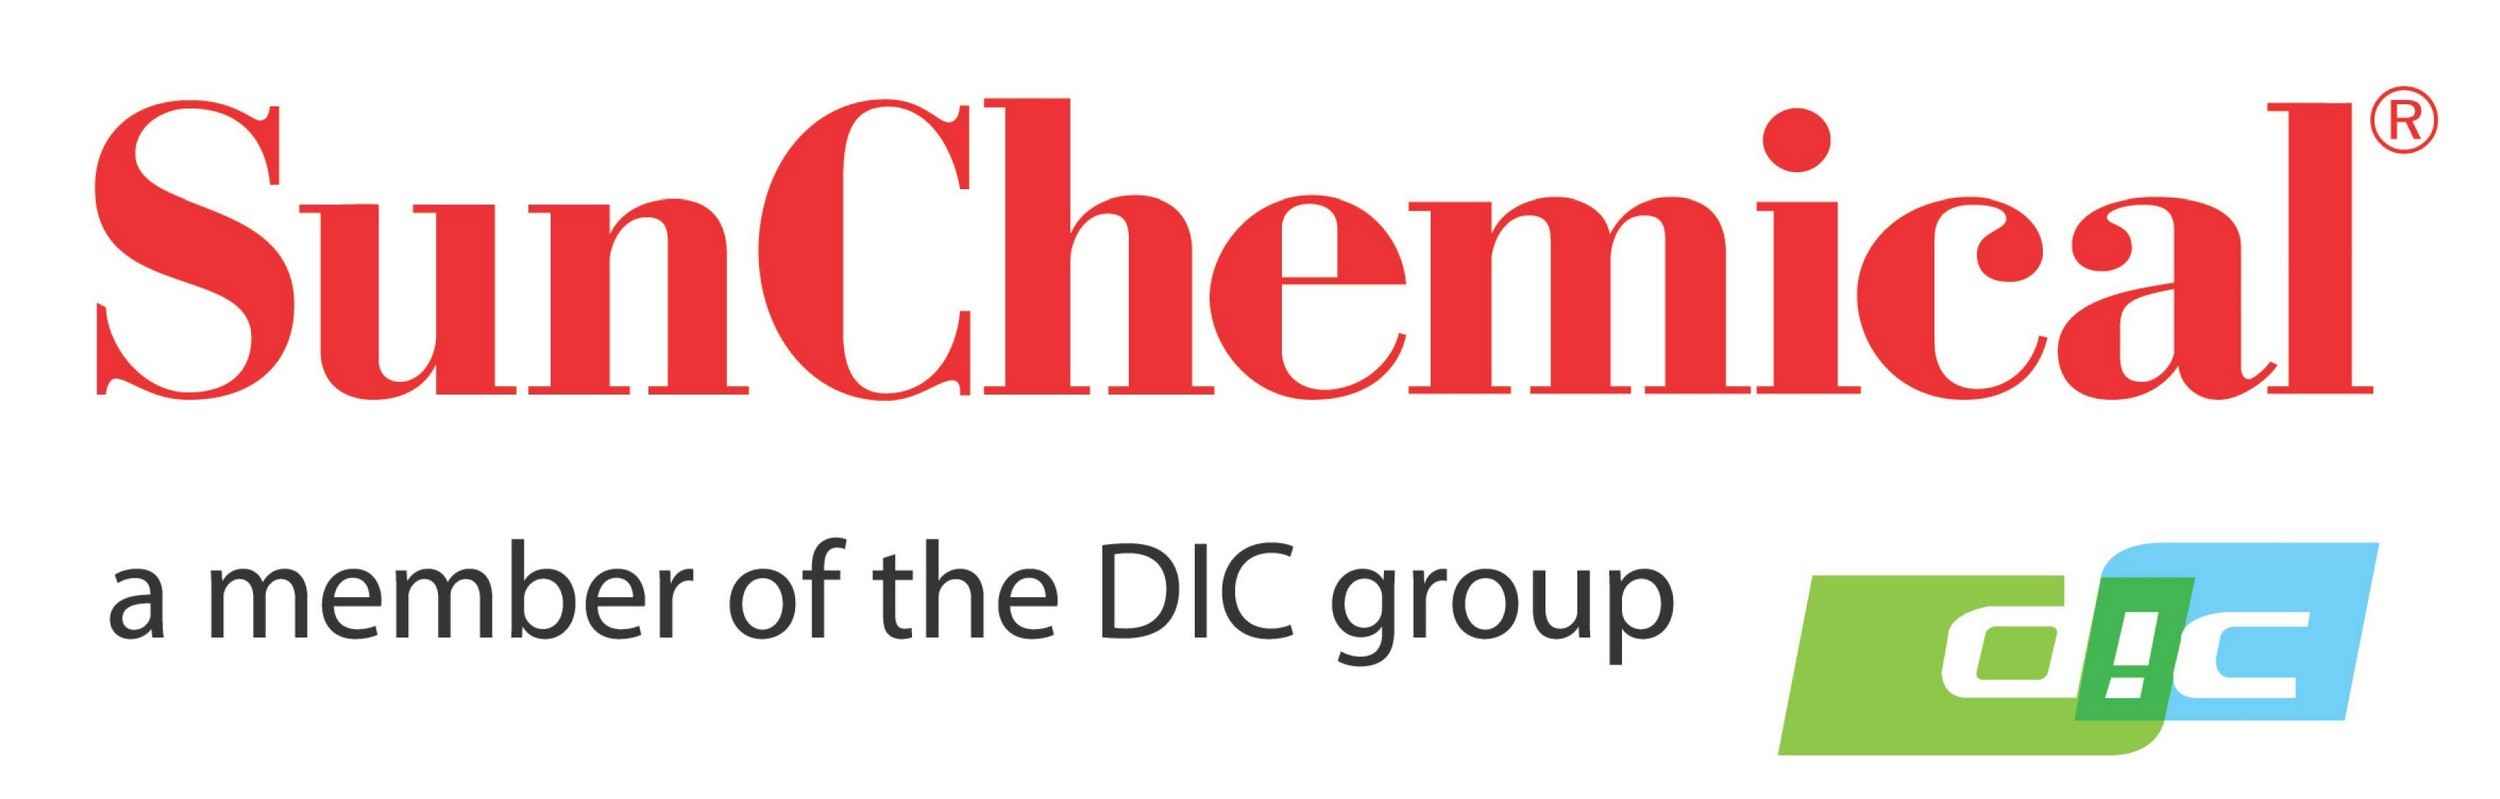 Sun Chemical Logo [AI PDF] png